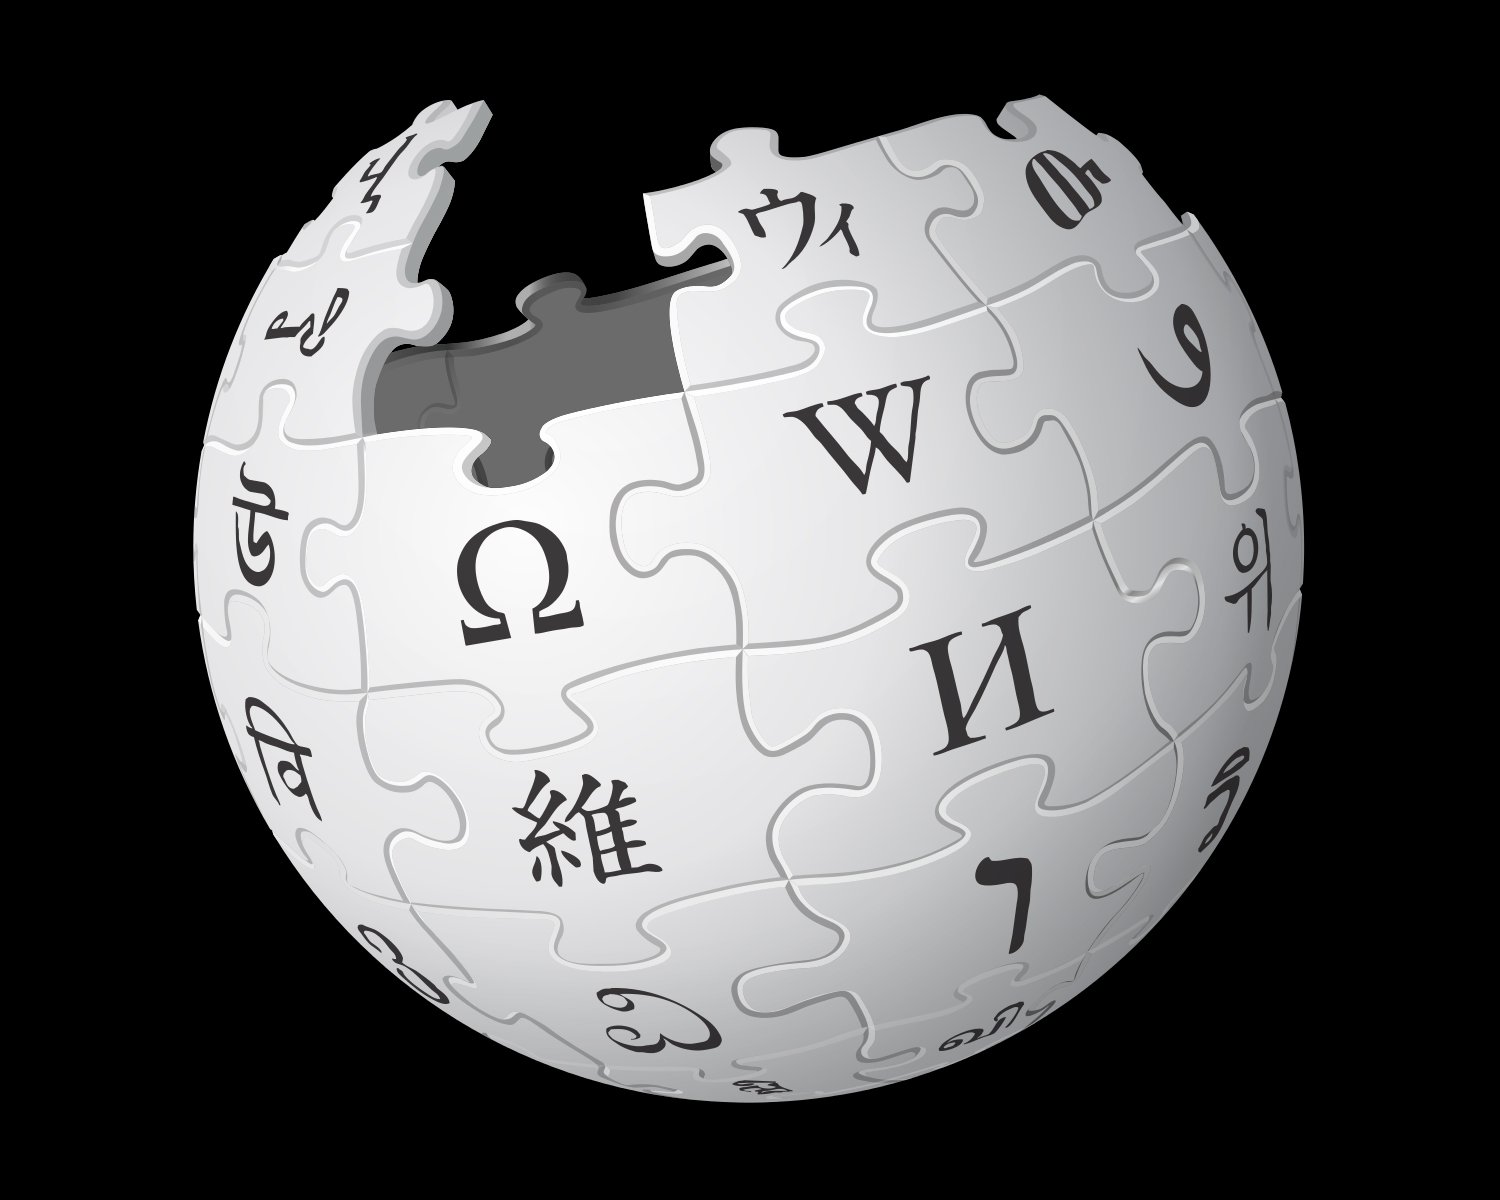 Logo - Wikipedia